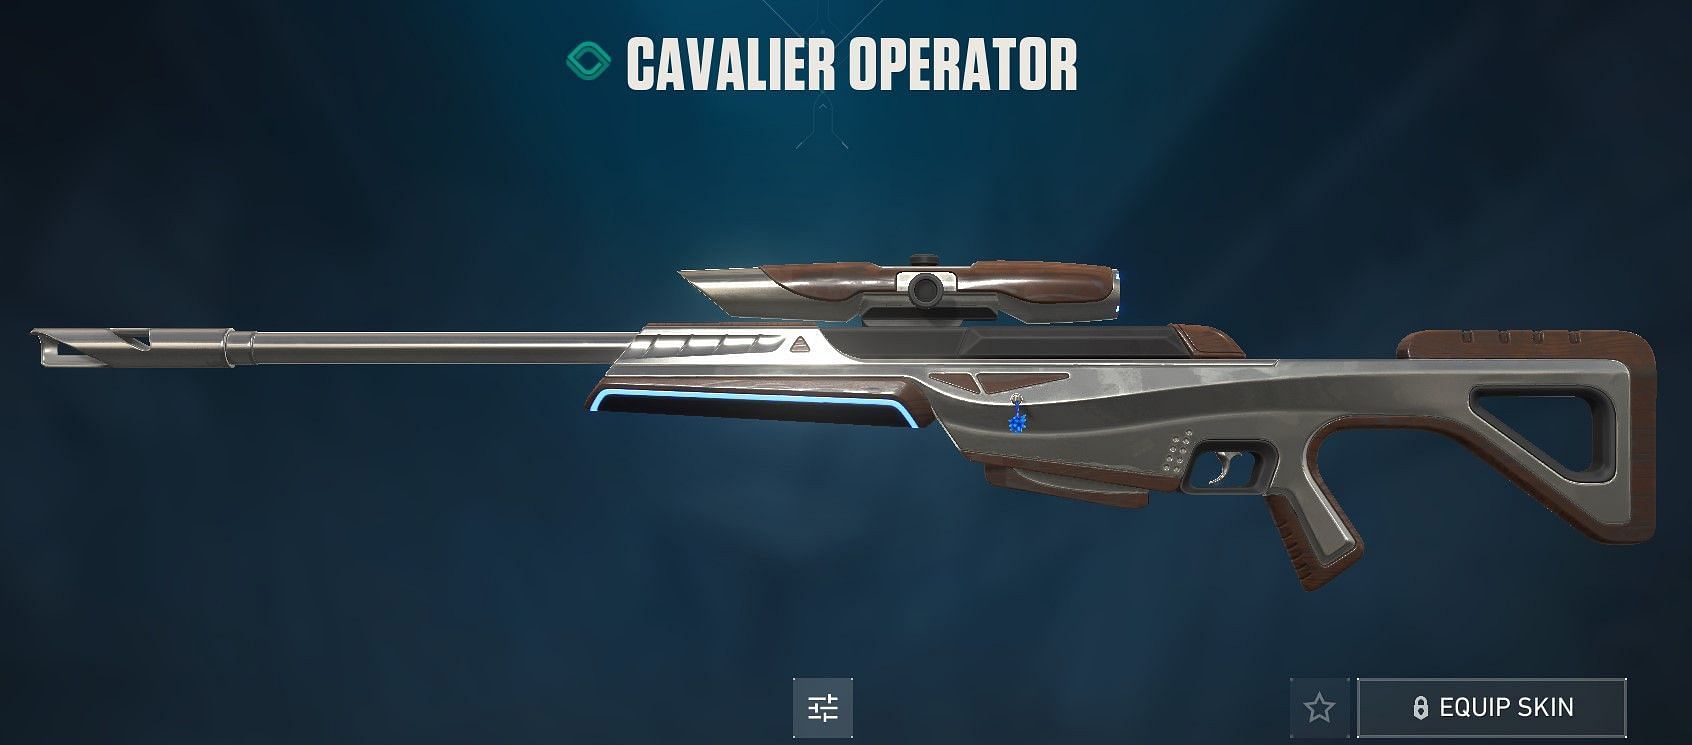 Cavalier Operator (Image via Riot Games)